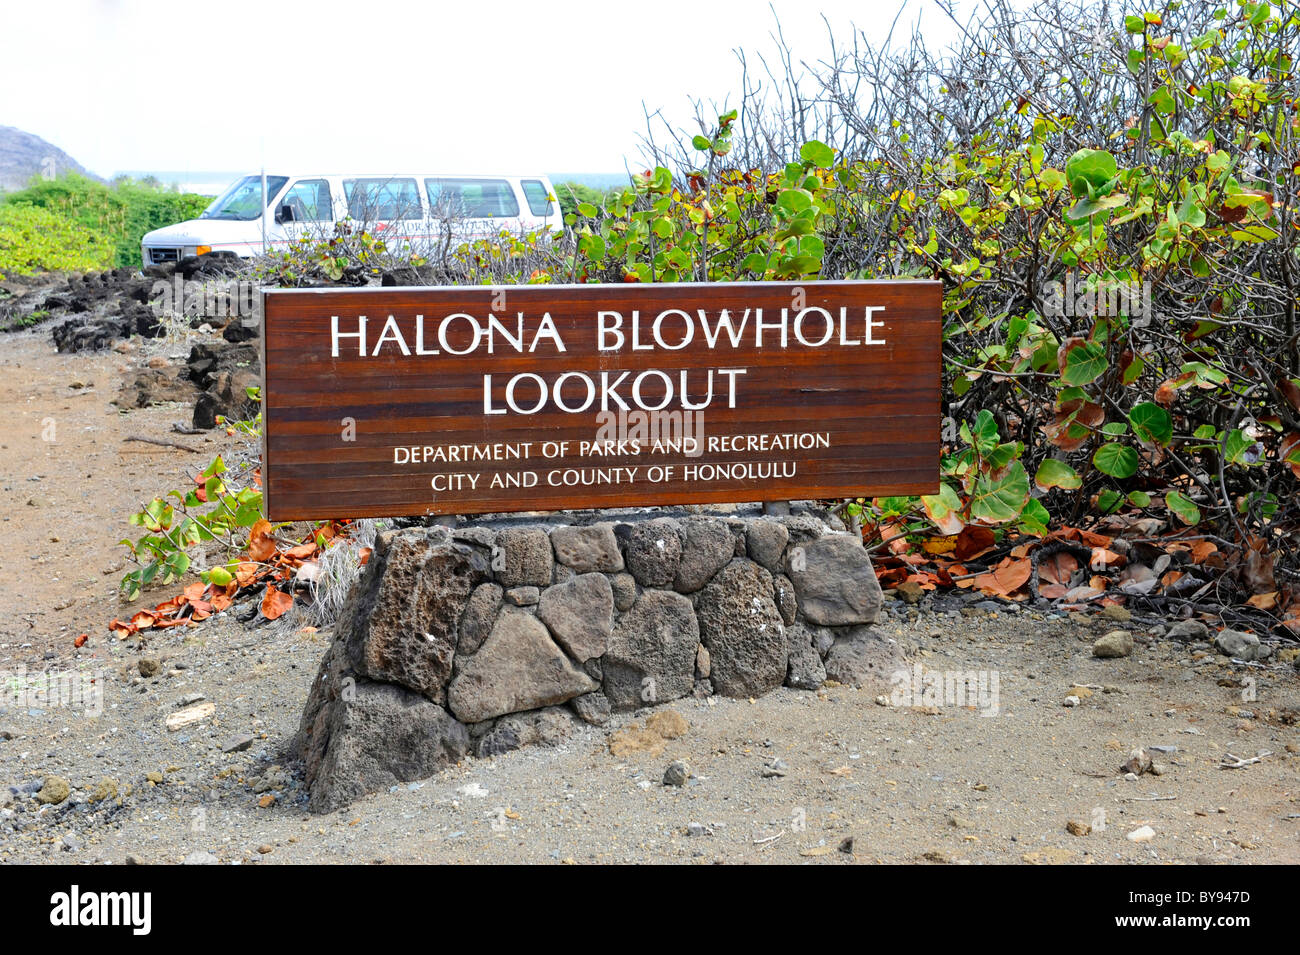 halona blowhole lookout South Oahu Beach Honolulu Hawaii Pacific Ocean Waikiki Stock Photo